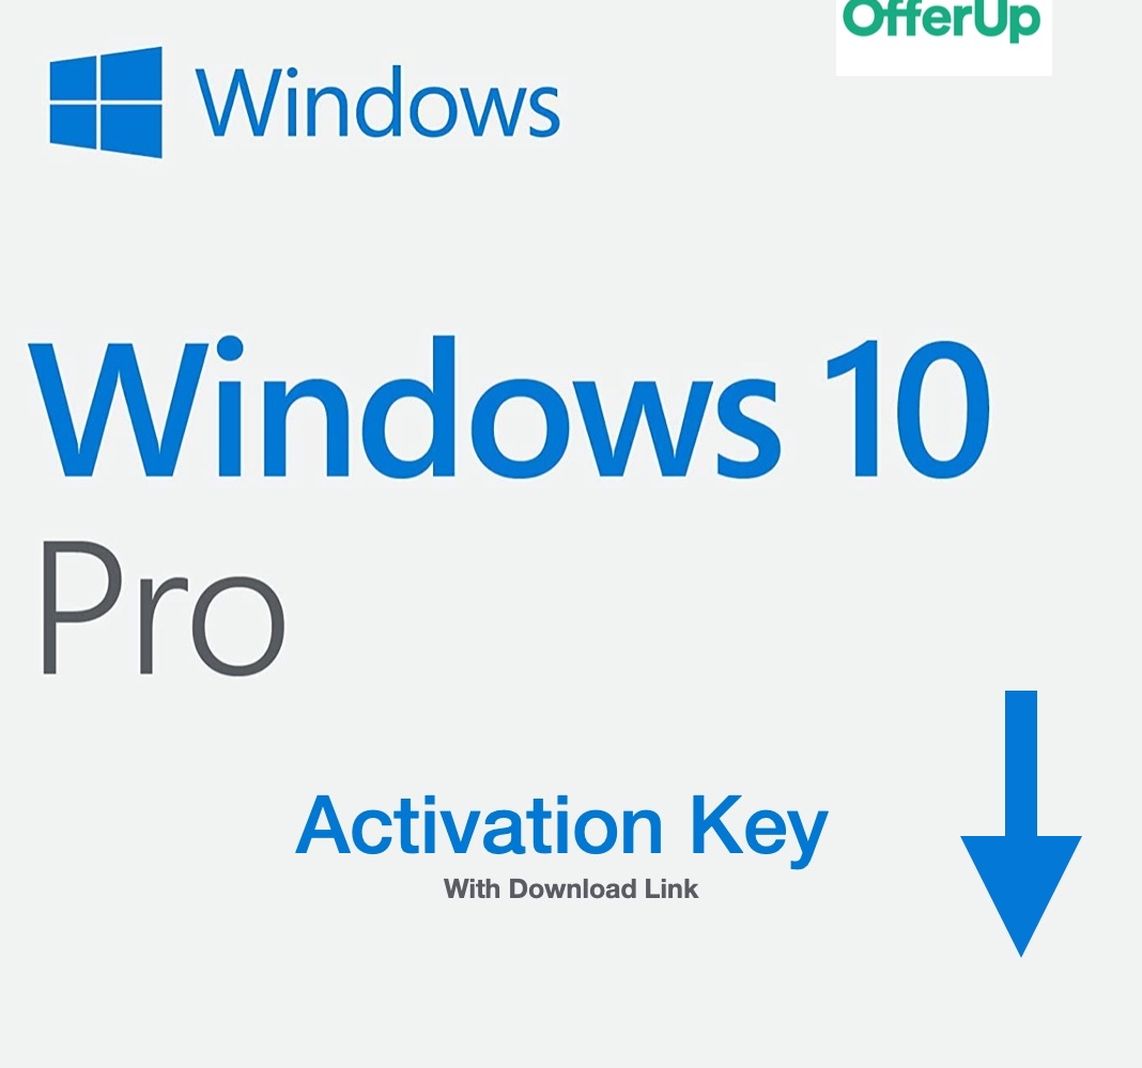 Windows 10 Pro - Activation Key + Download link